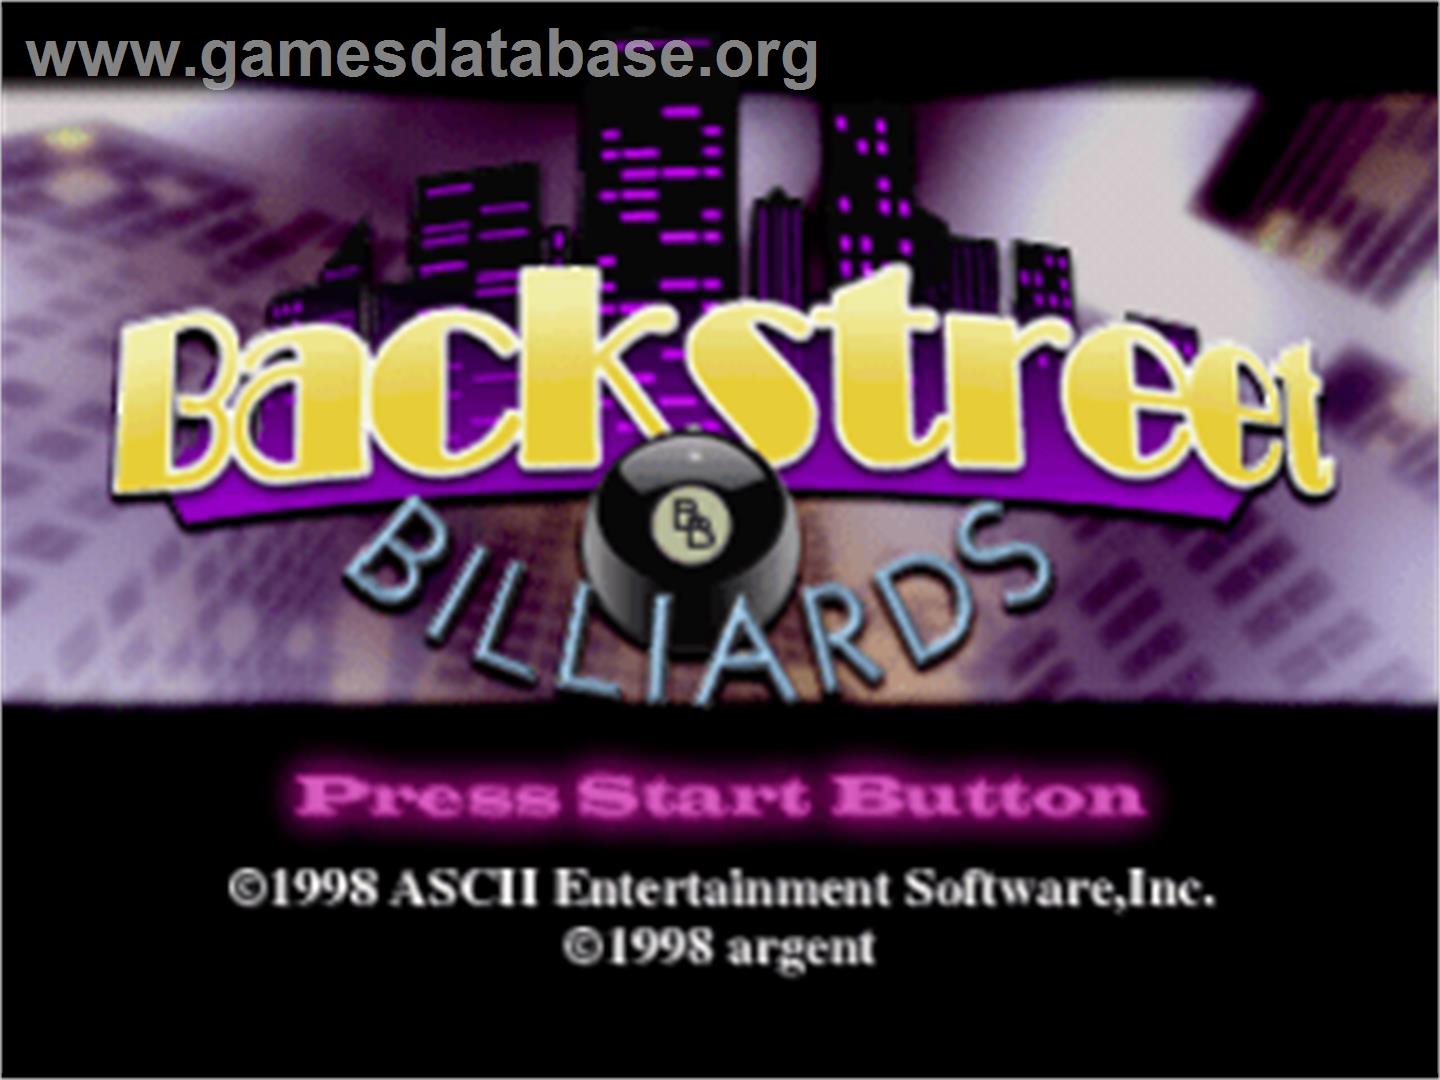 Backstreet Billiards - Sony Playstation - Artwork - Title Screen